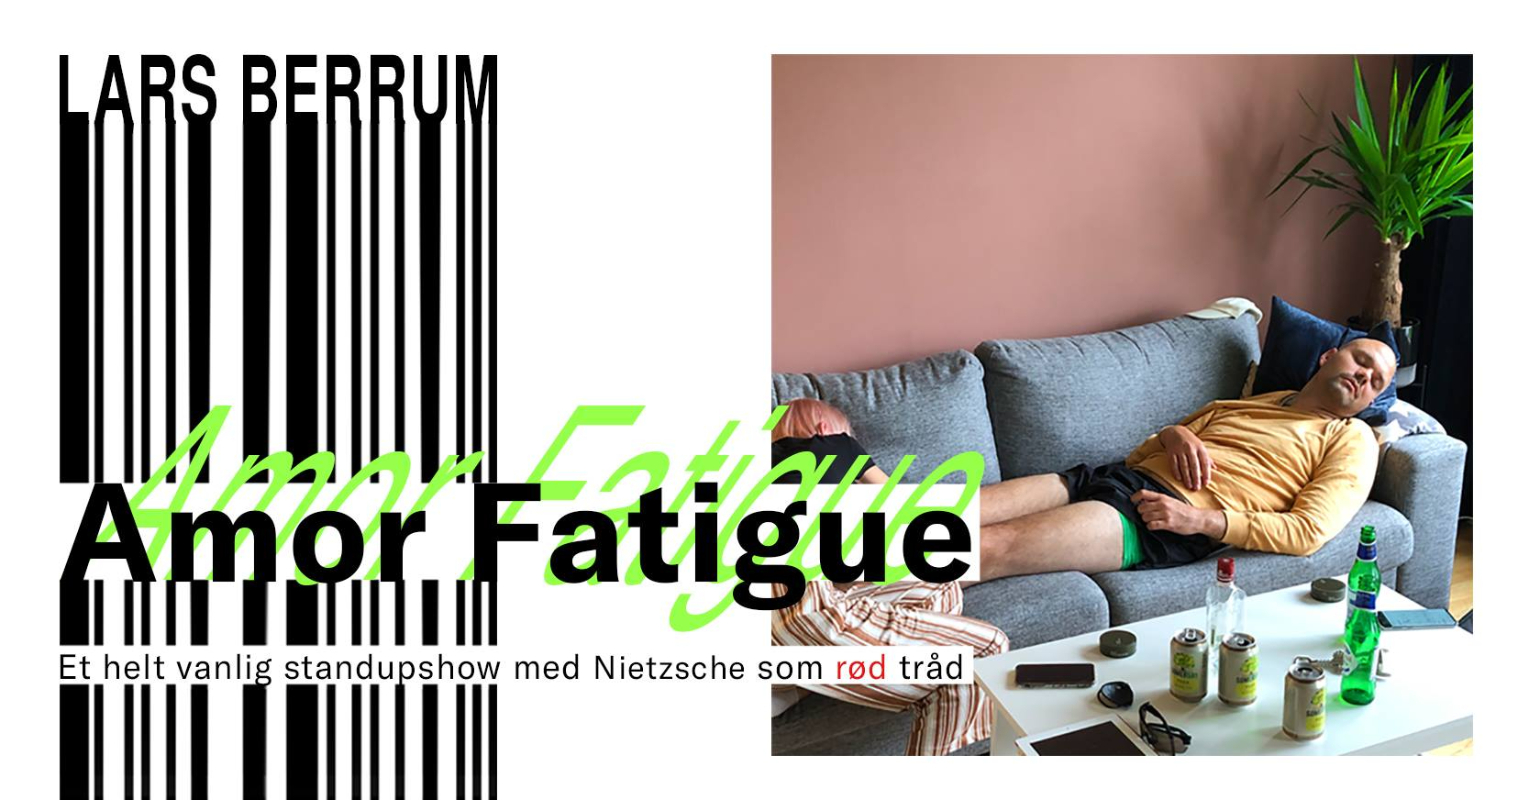 Lars Berrum - Amor Fatigue